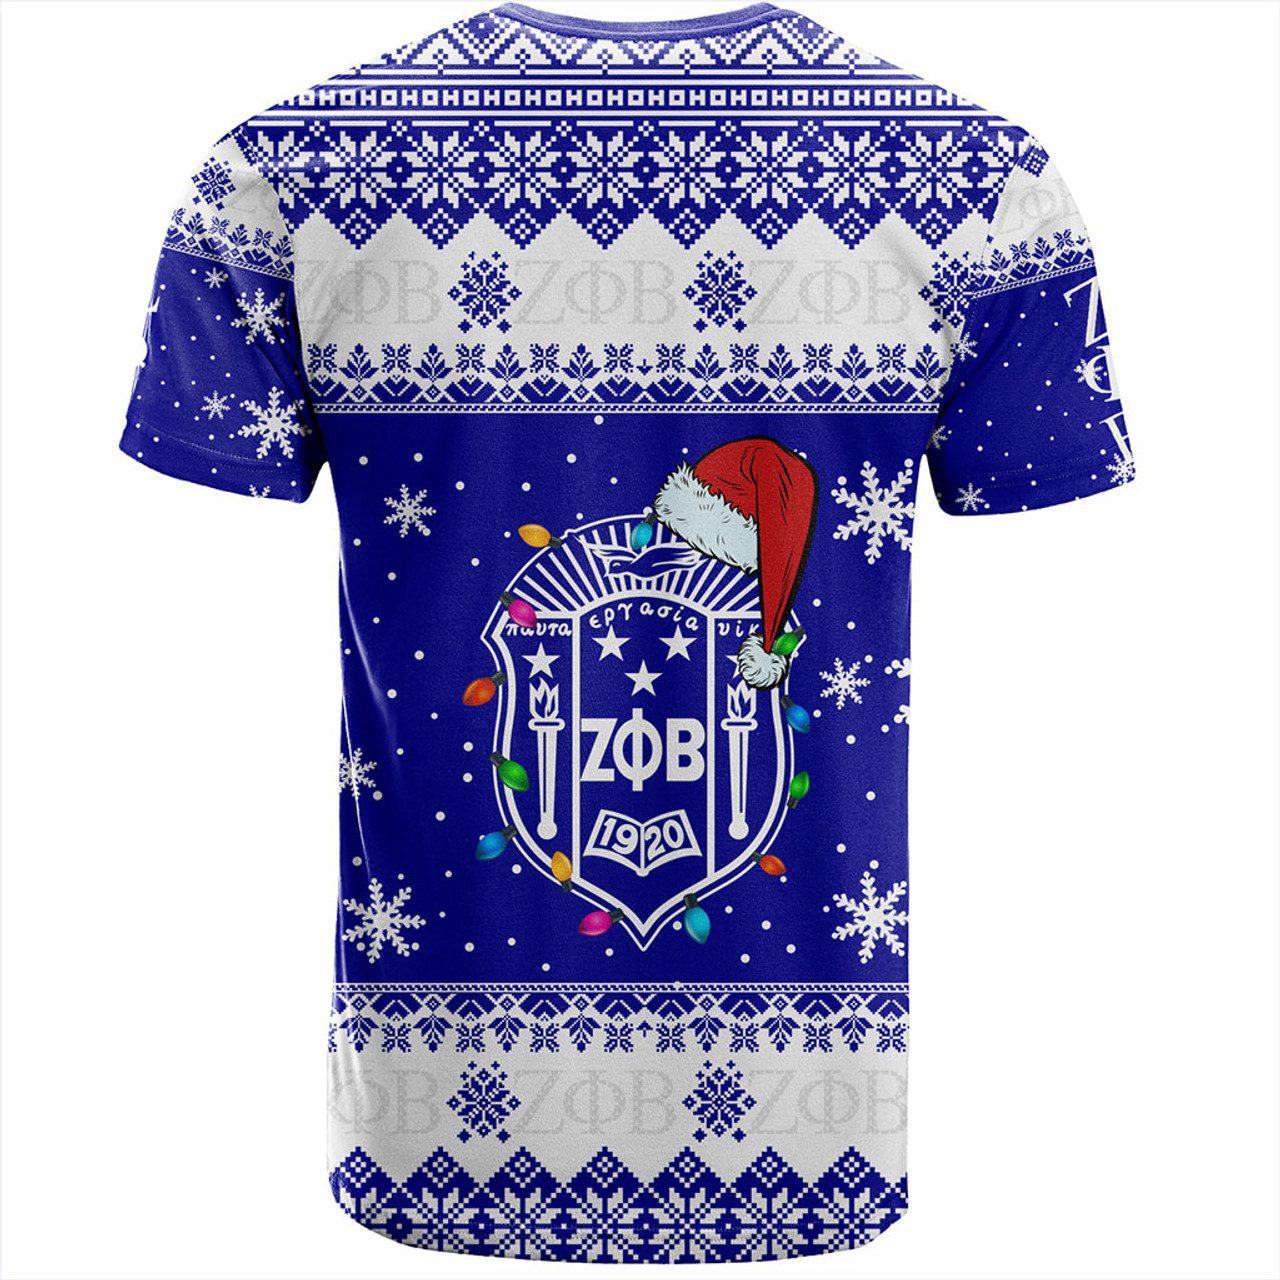 Zeta Phi Beta T-Shirt Christmas Symbols Design